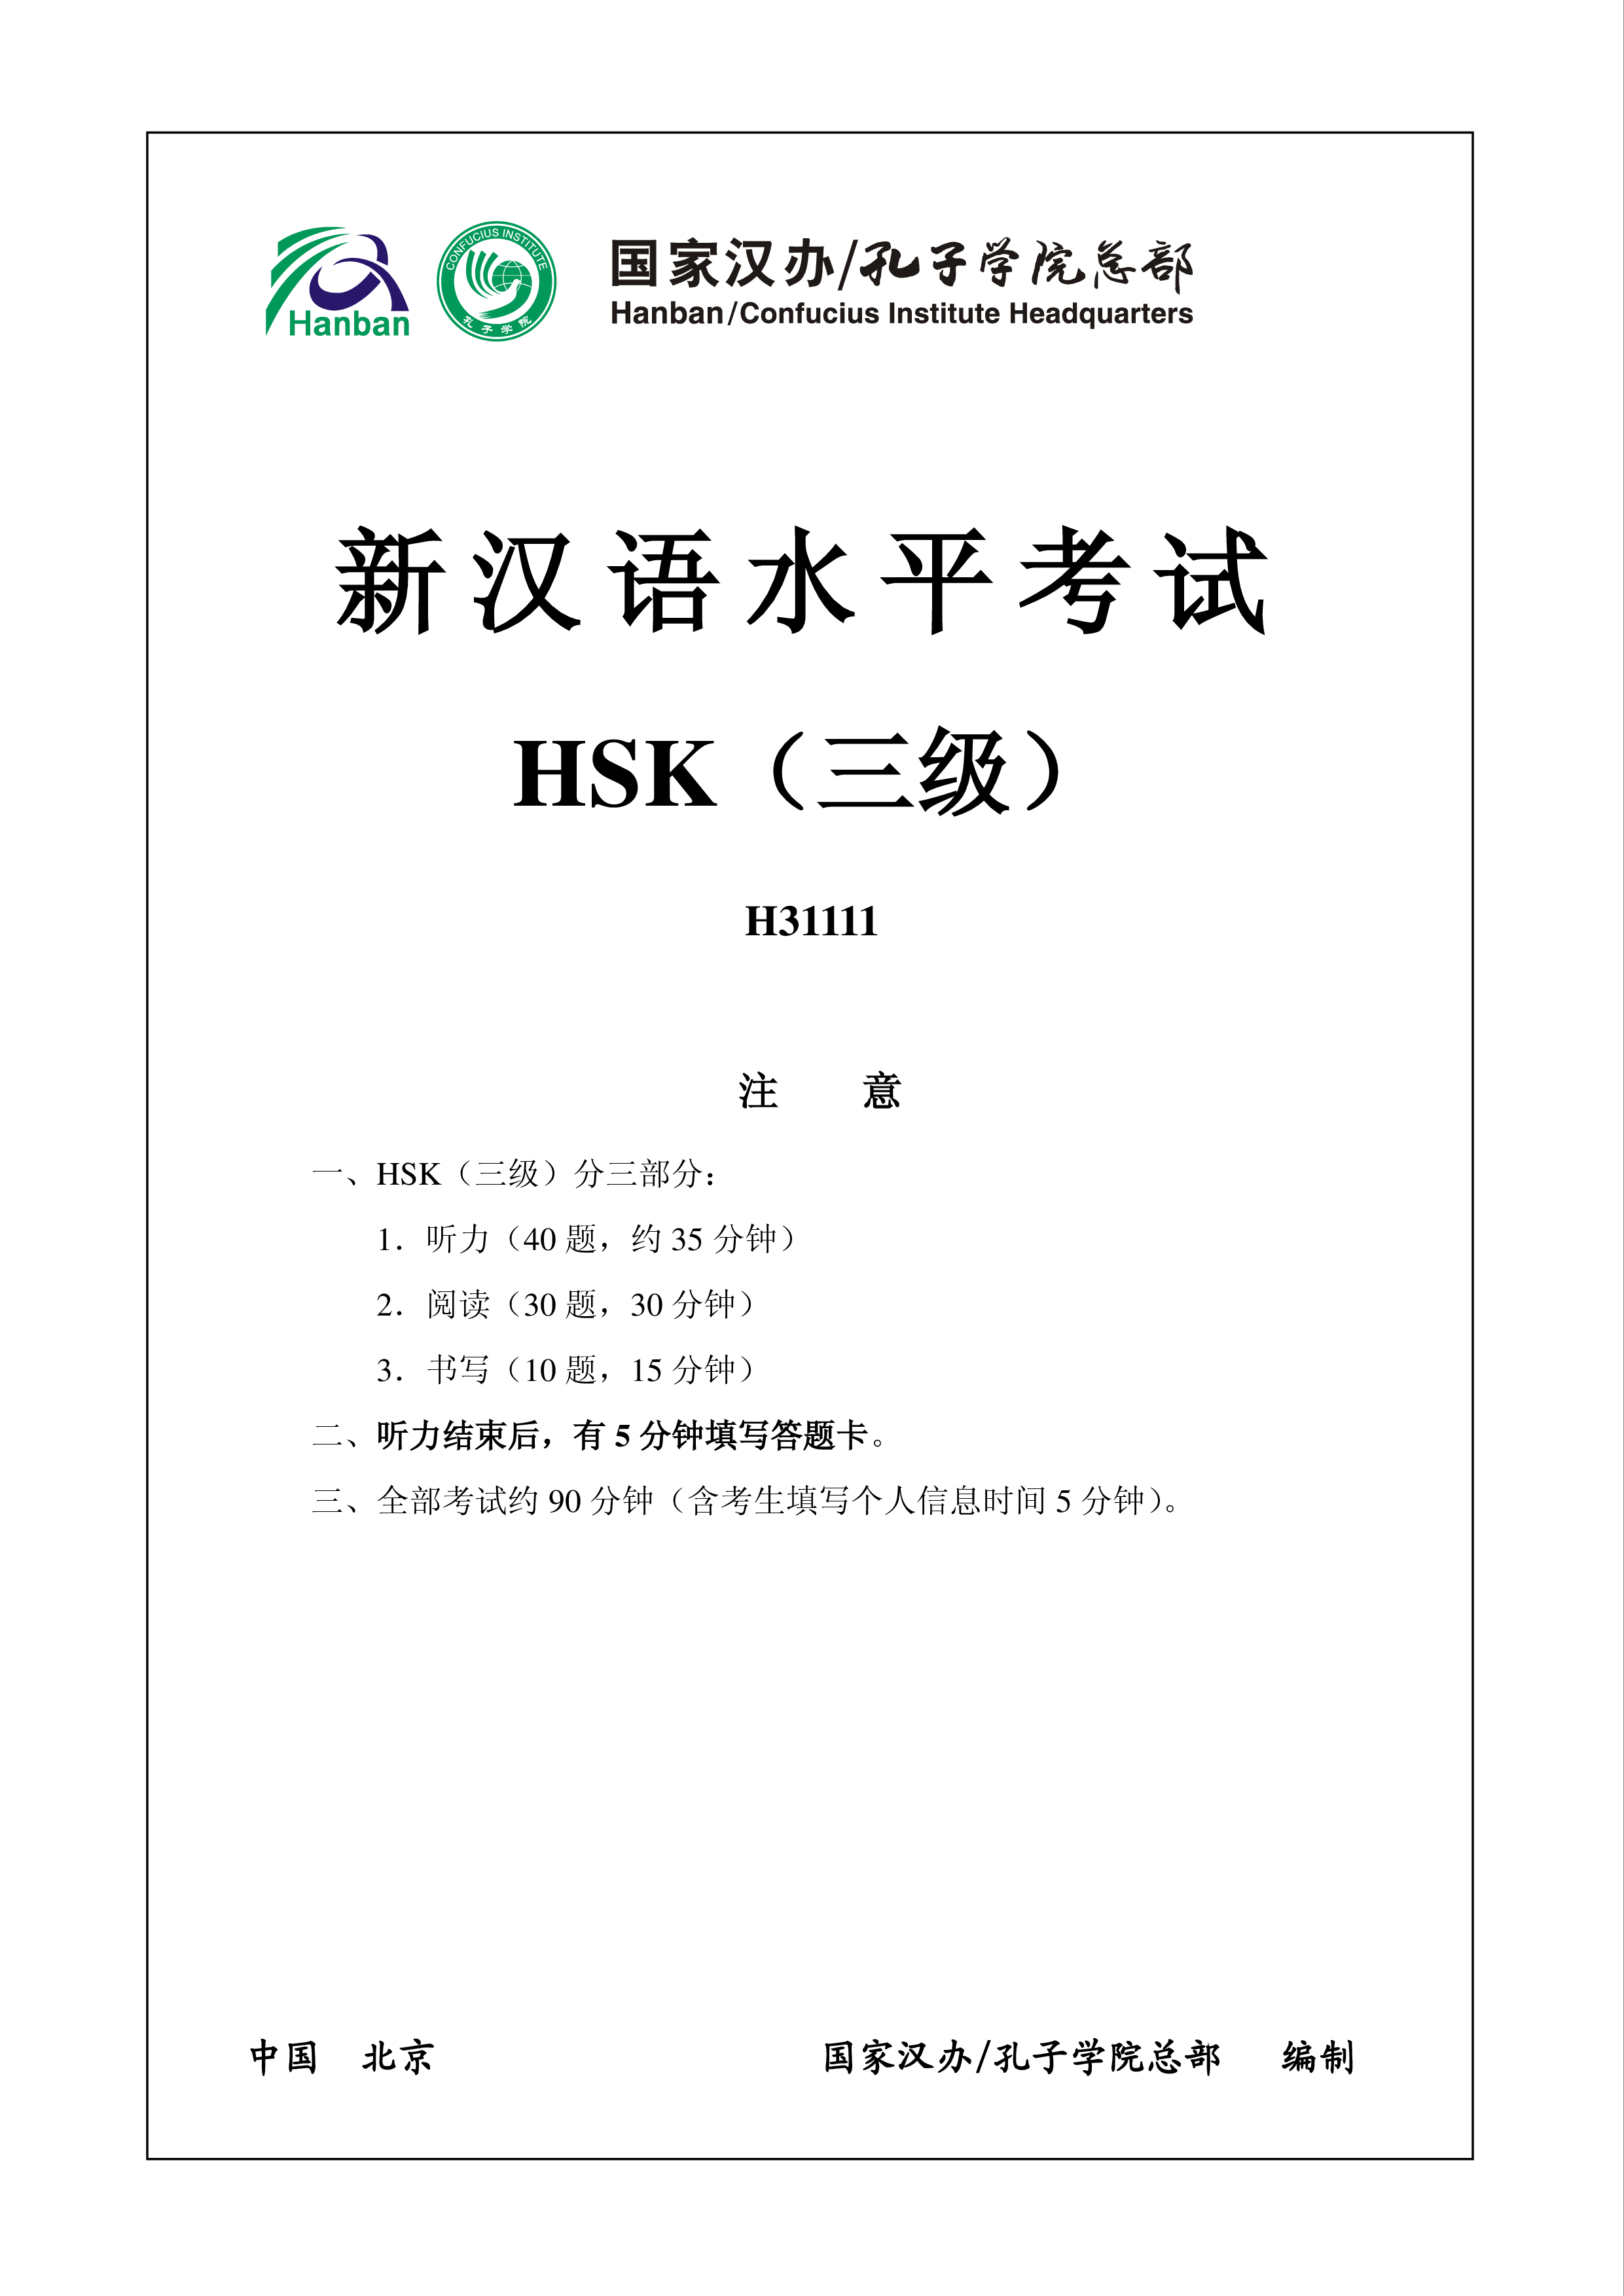 hsk 3 h31111 exam paper template